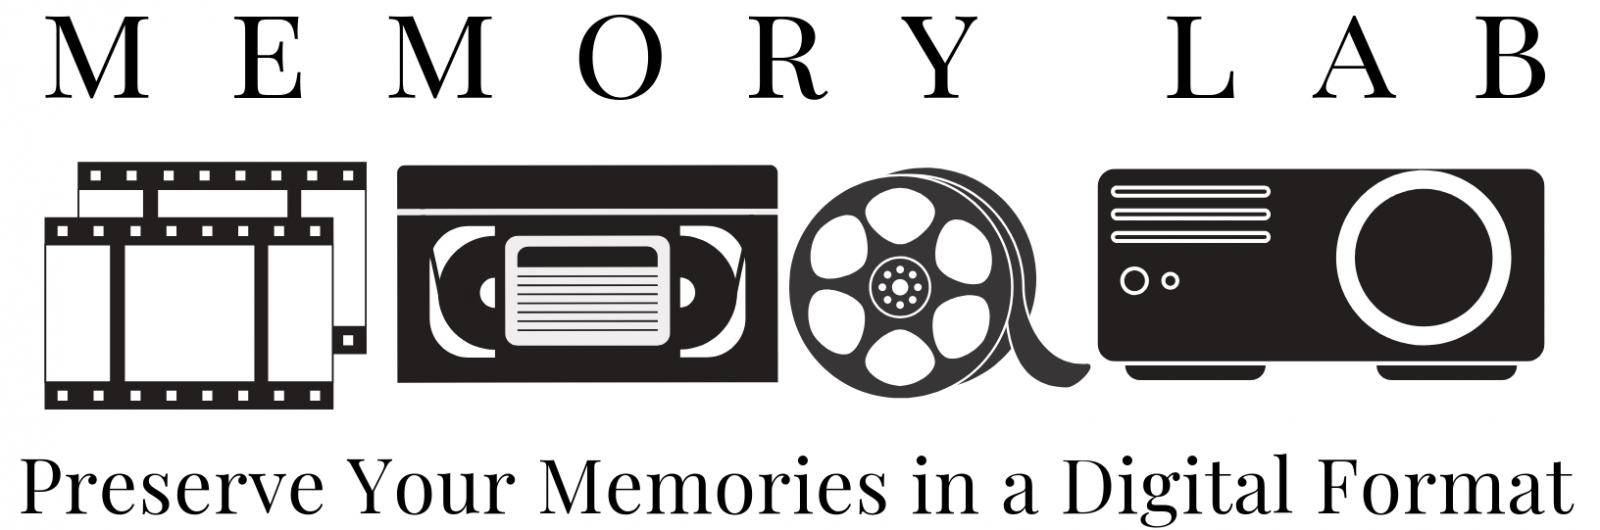 Memory Lab Banner